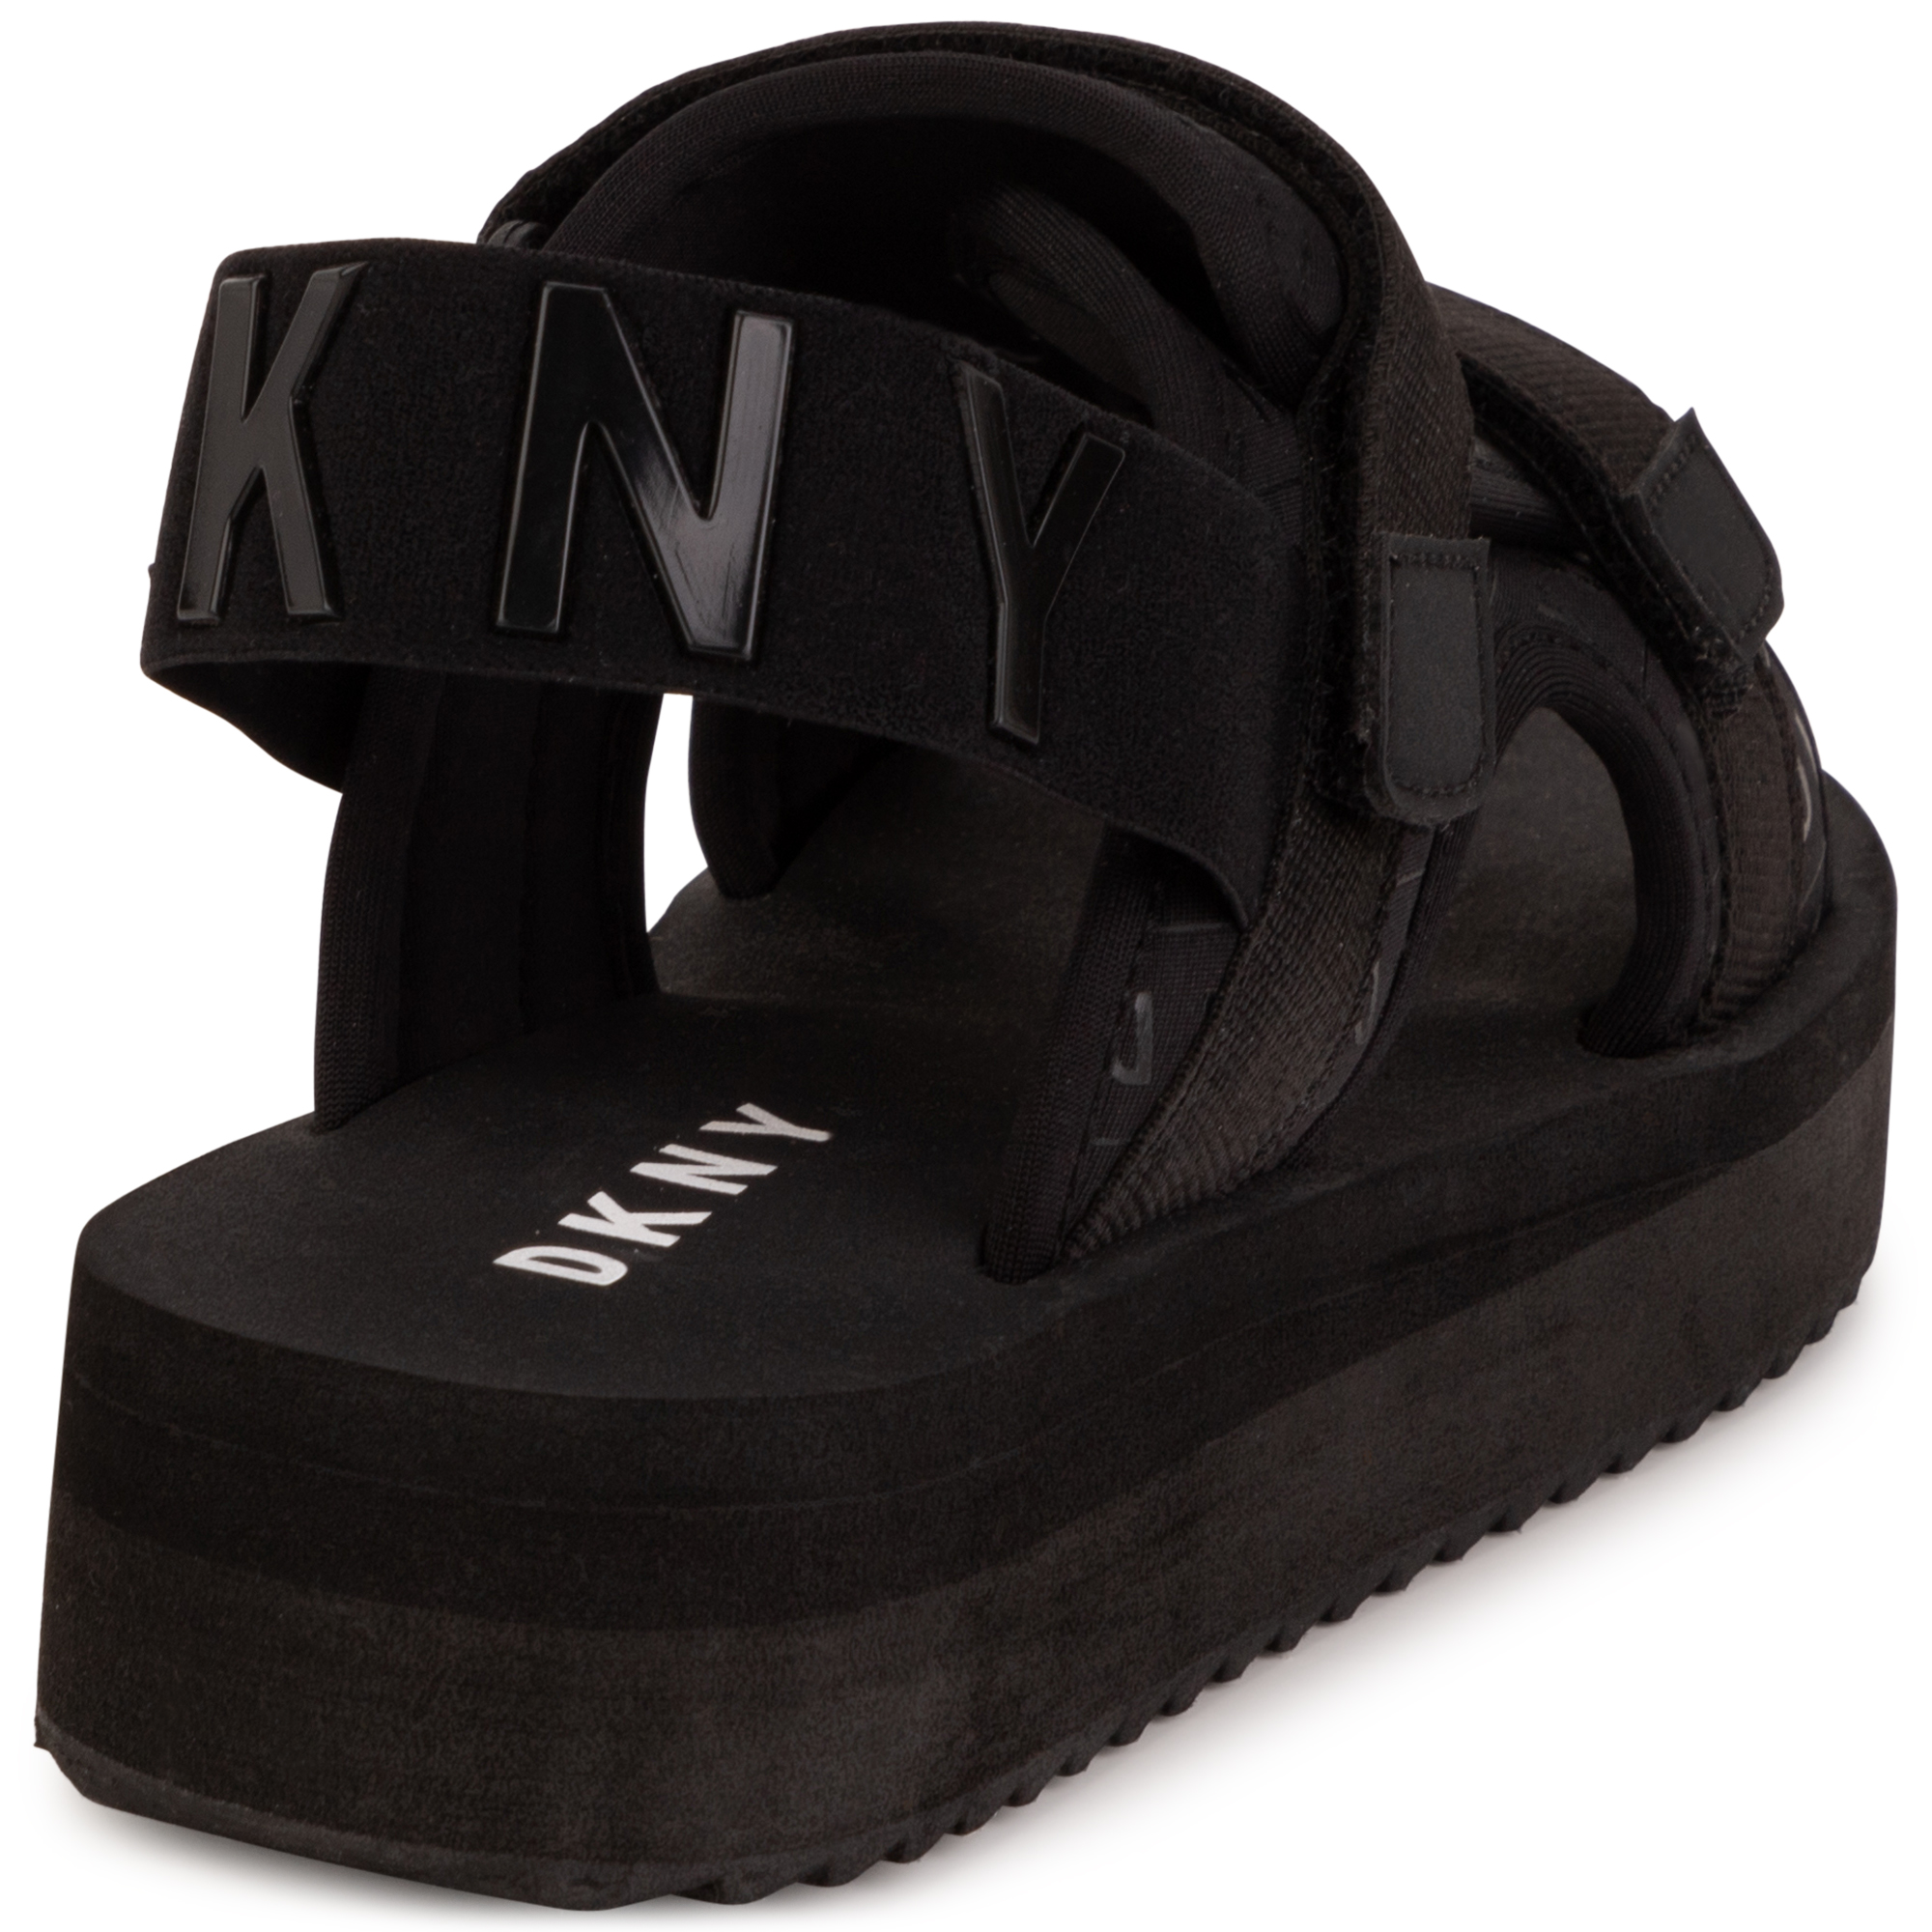 Satin sandals DKNY for GIRL